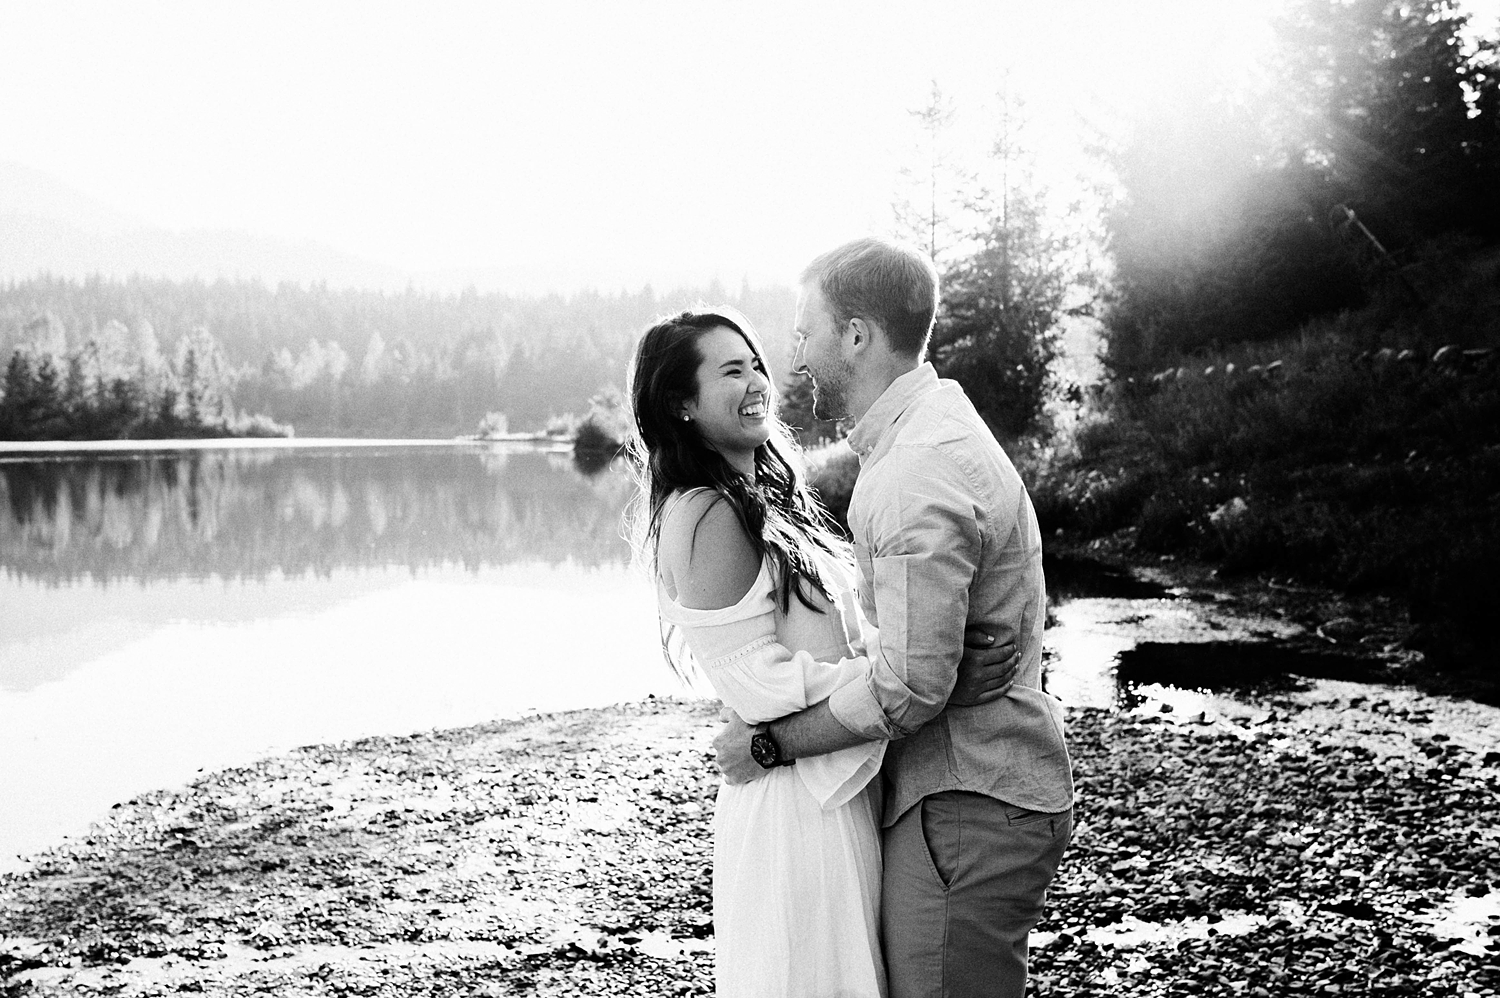 Seattle Wedding Photographer does engagement session at Gold Creek Pond | Meg Newton Photography 